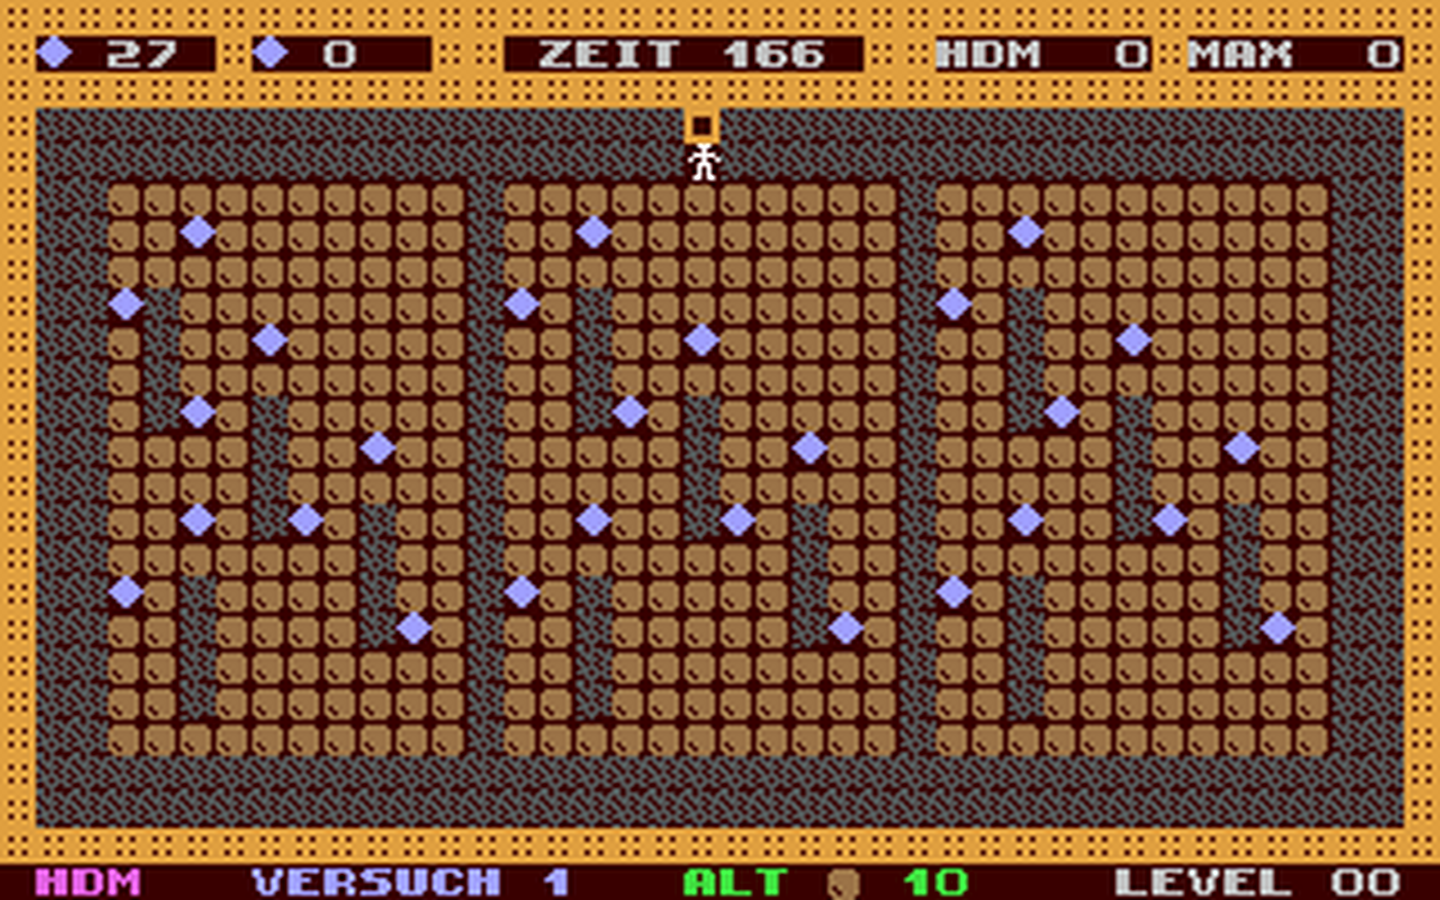 C64 GameBase Micro_Boulderdash_Dist (Not_Published)